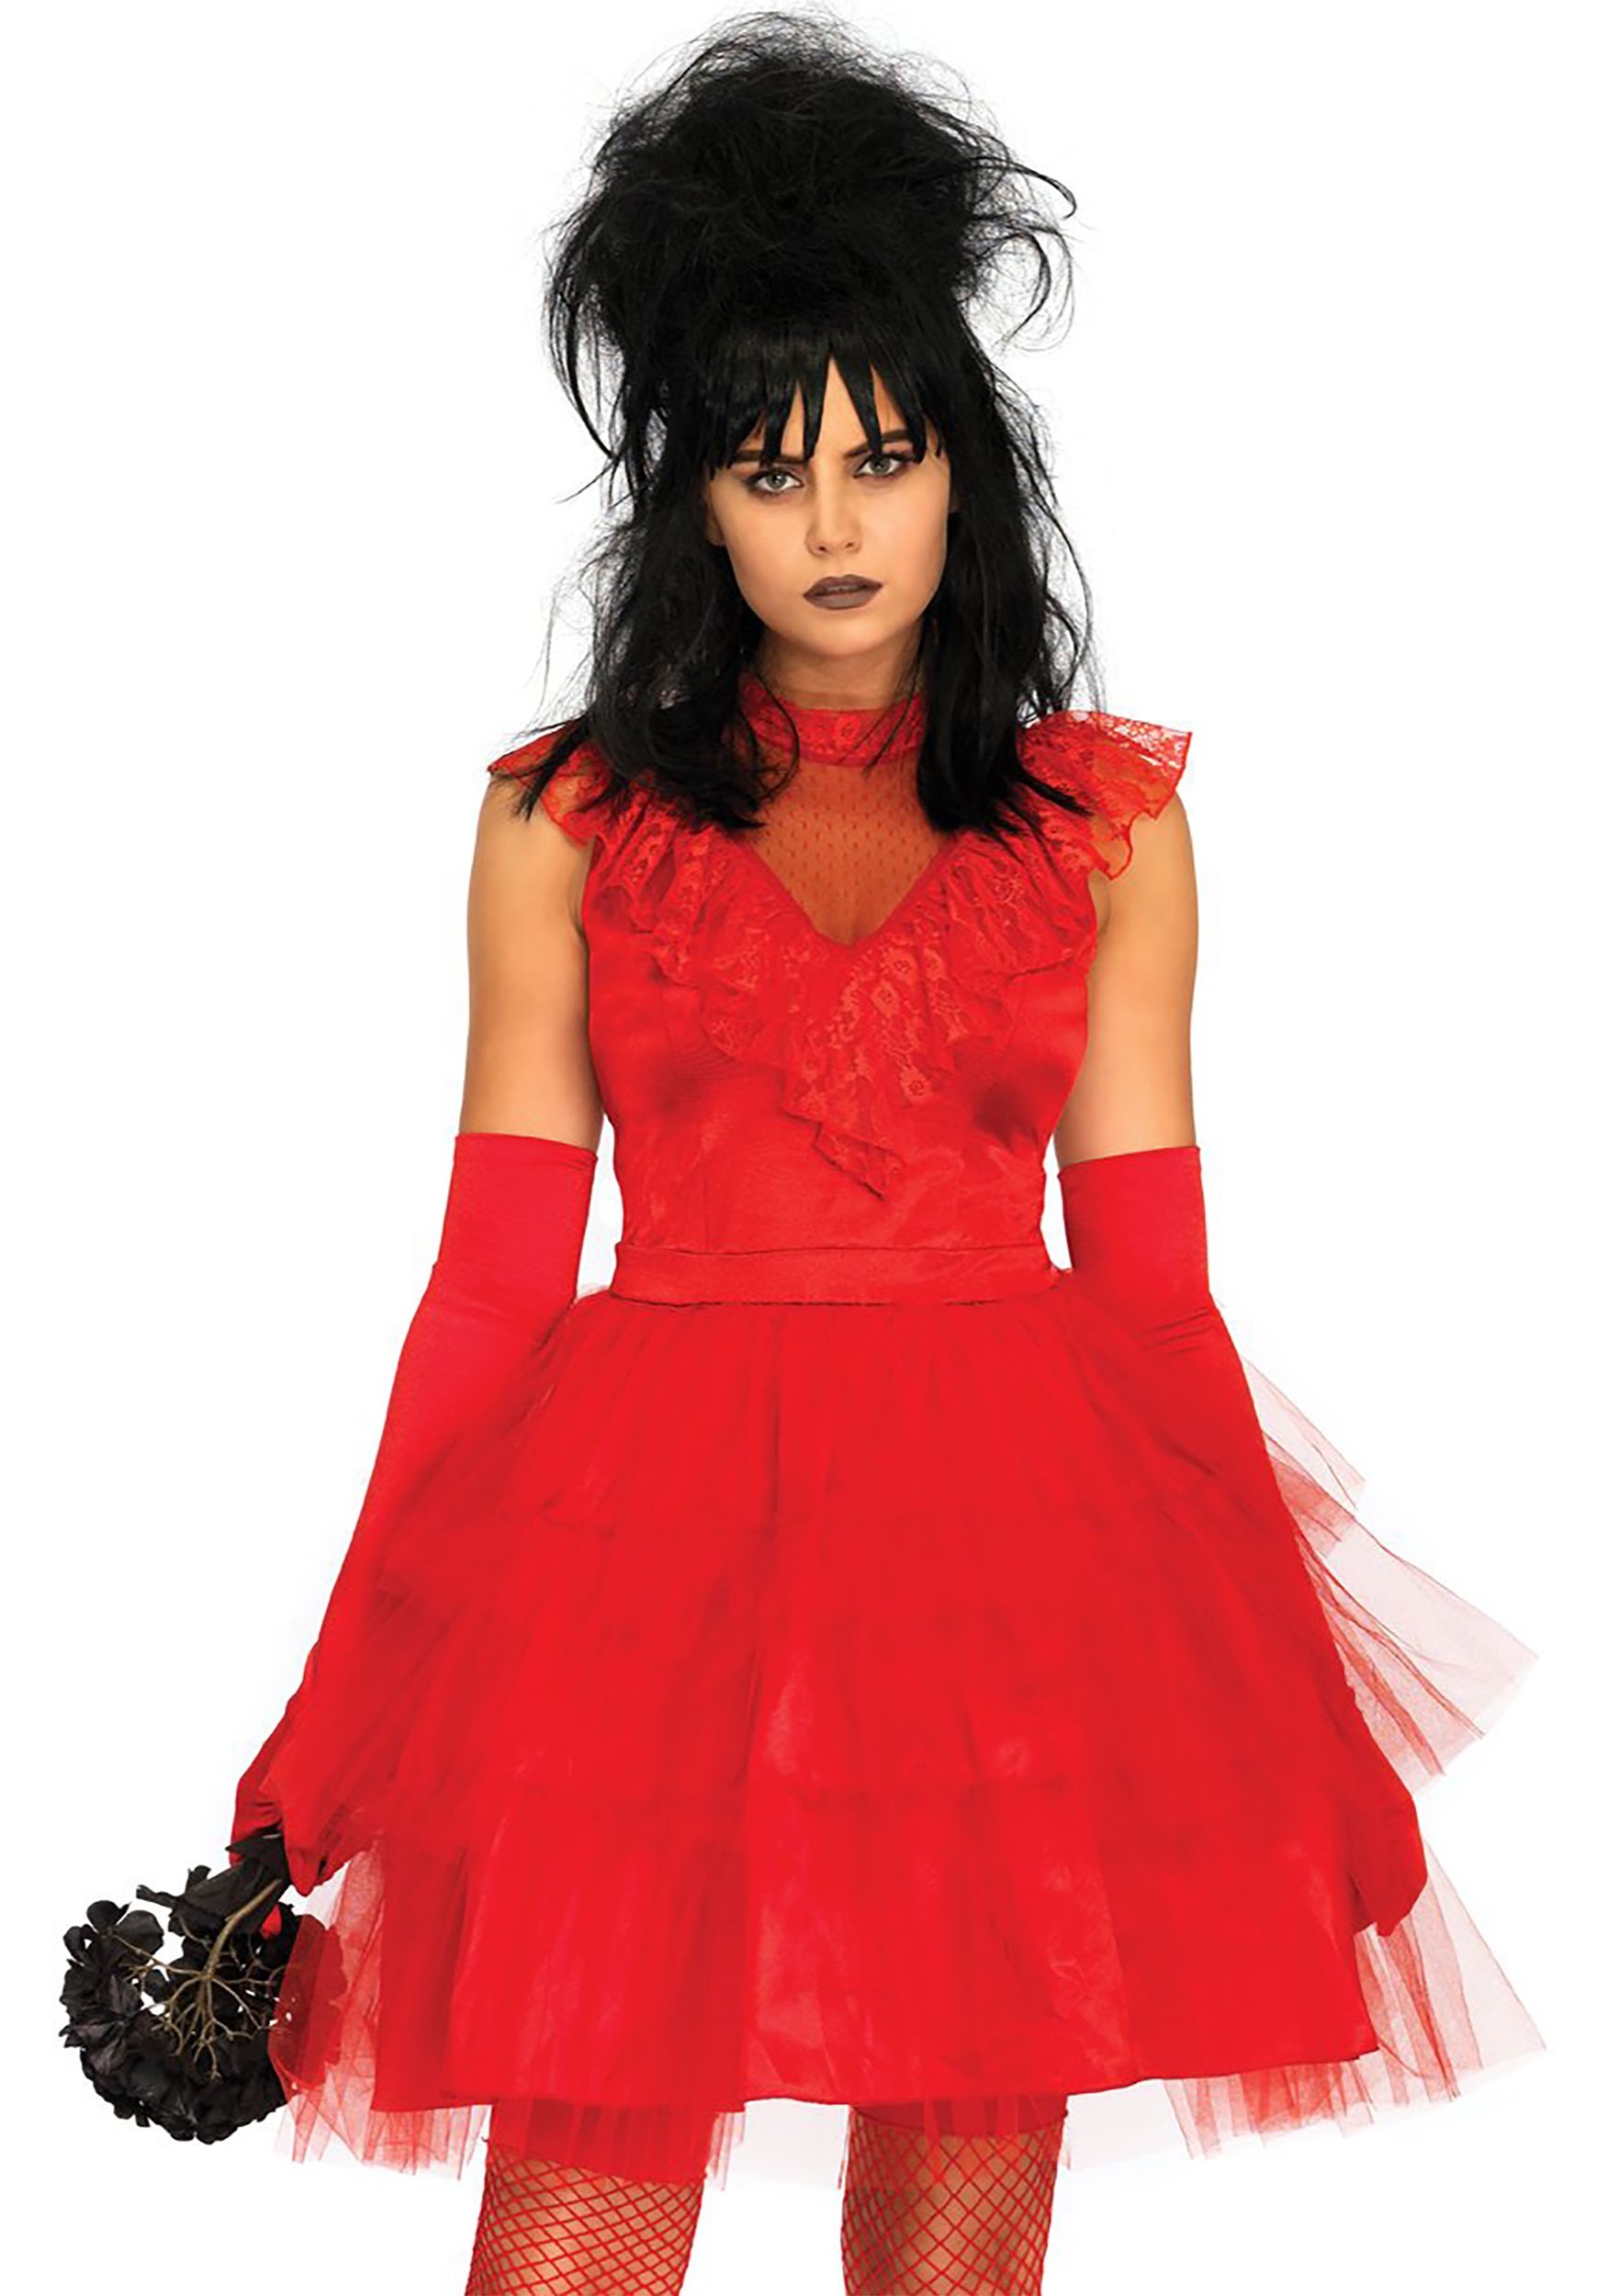 https://images.halloweencostumes.com/products/57974/1-1/beetle-bride-womens-costume.jpg